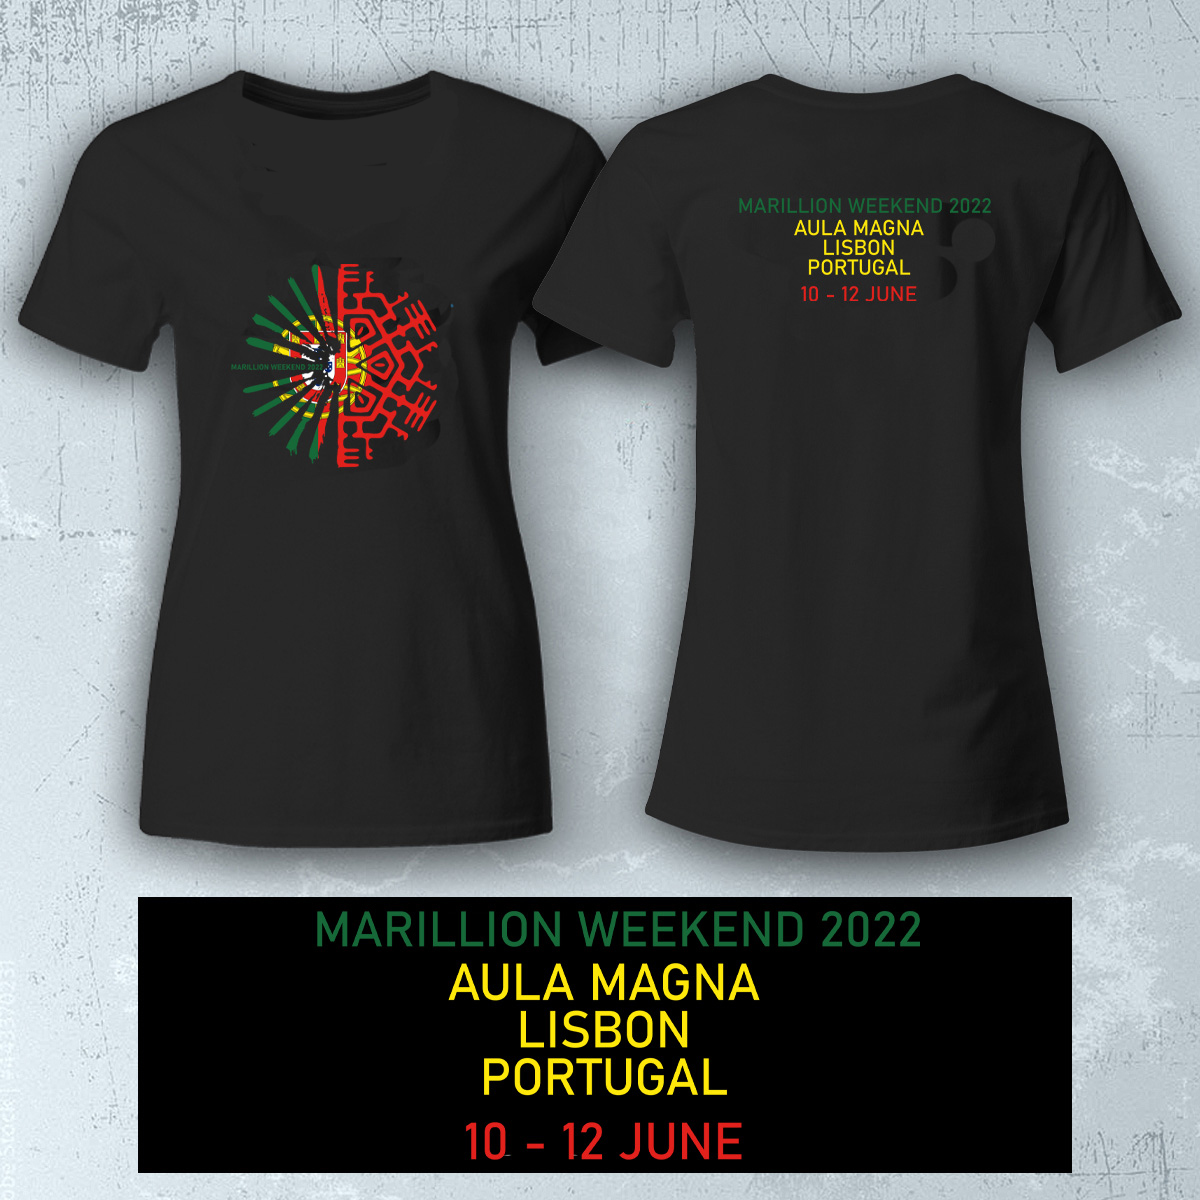 MW 2022 - Portugal Shirts Ladies Black Round Neck T-Shirt